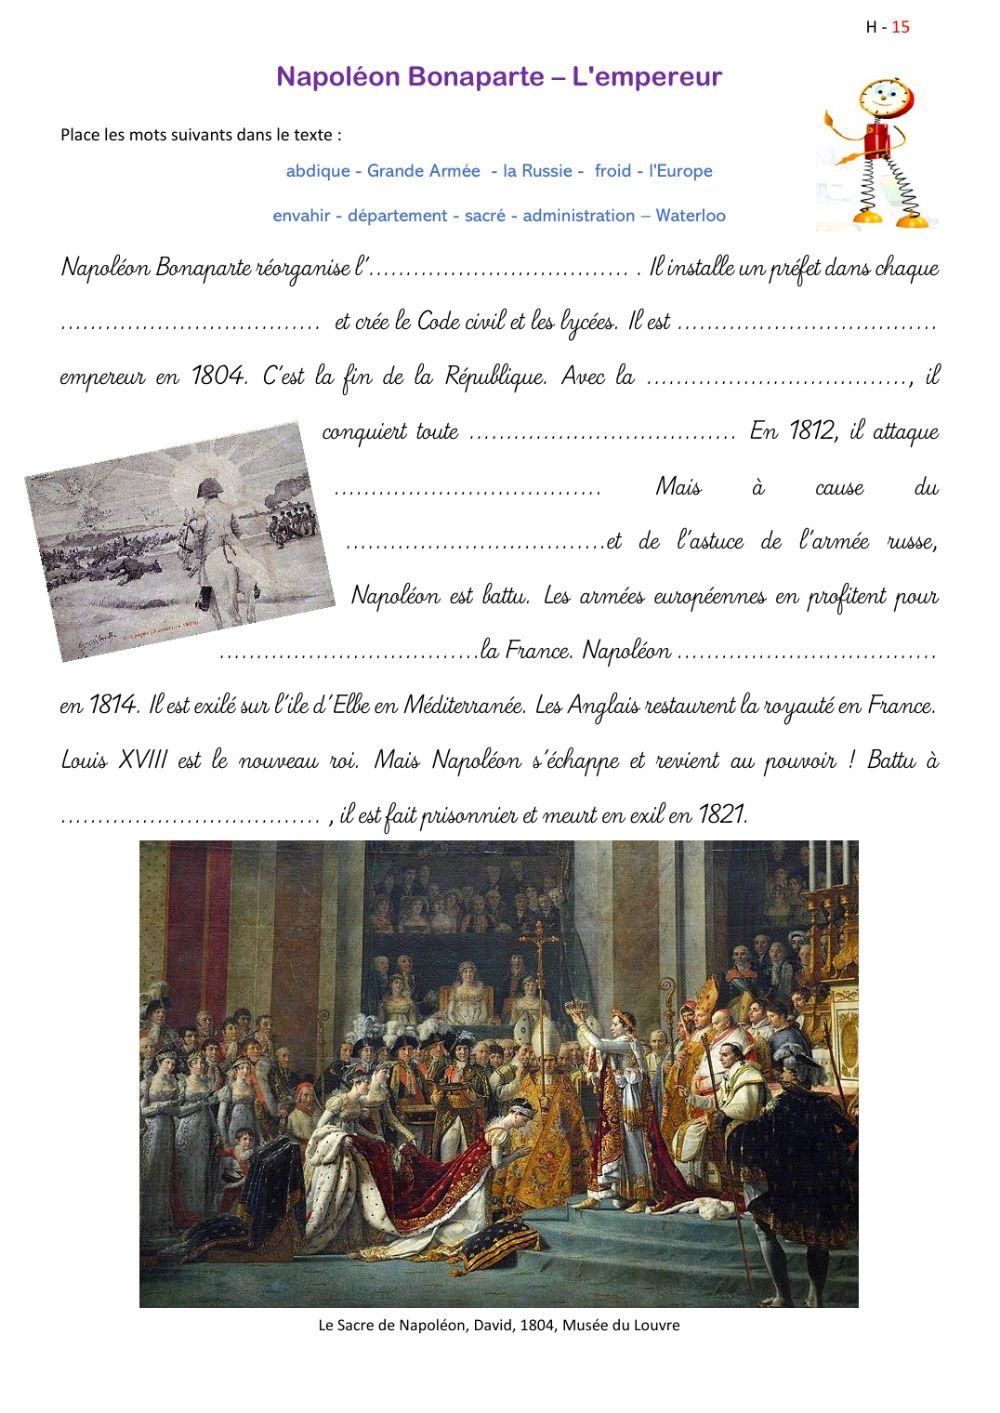 H15 - Napoléon l'empereur